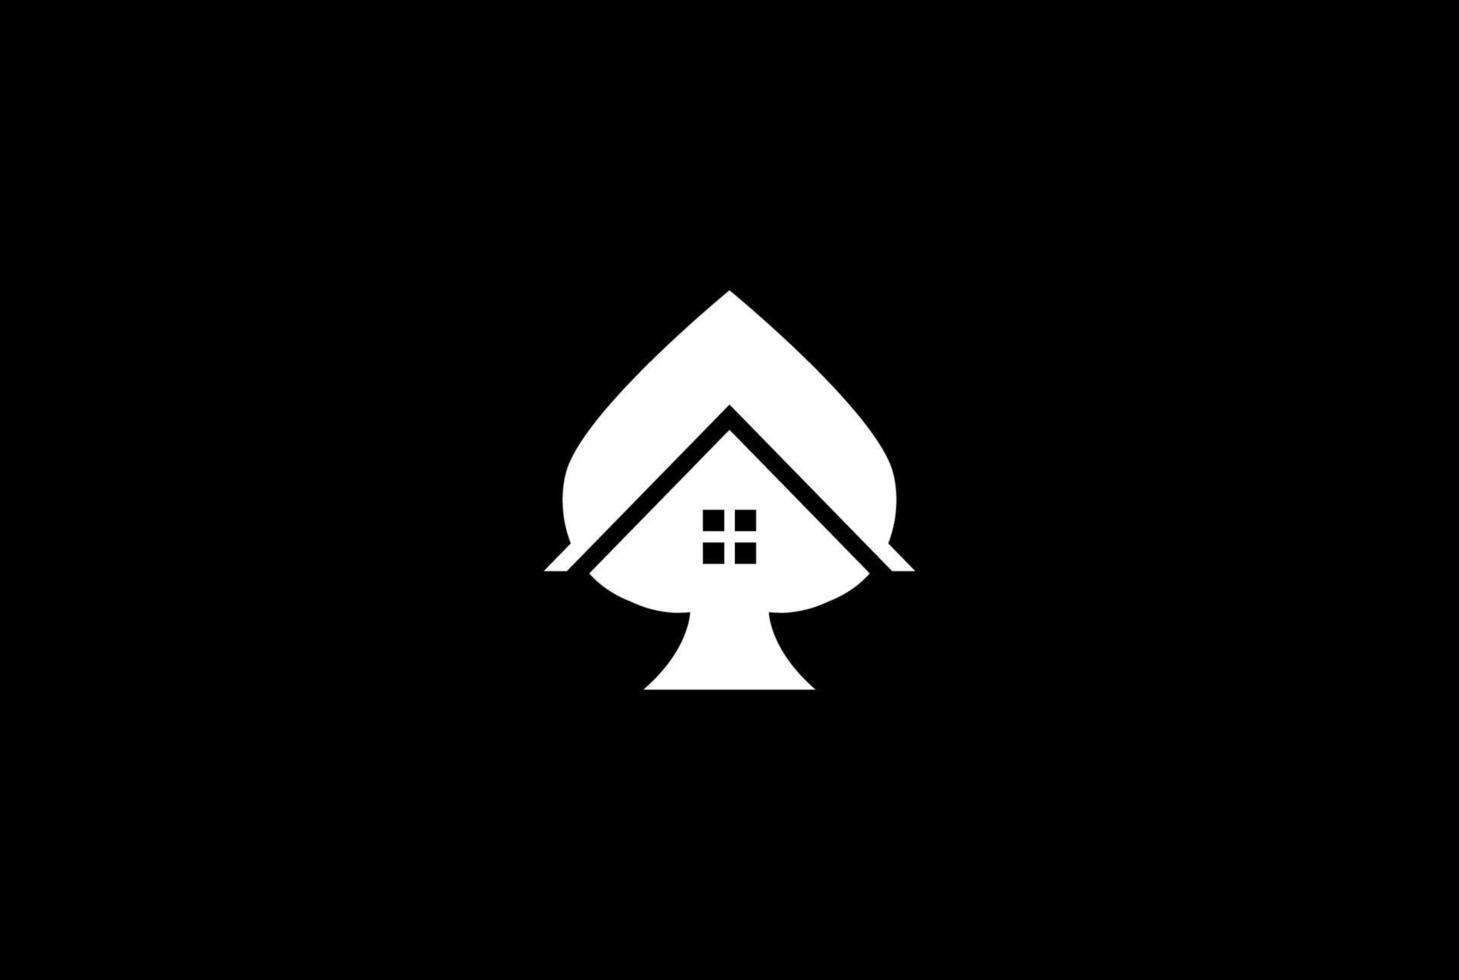 semplice e minimalista asso spade scoop per poker casino house logo design vector